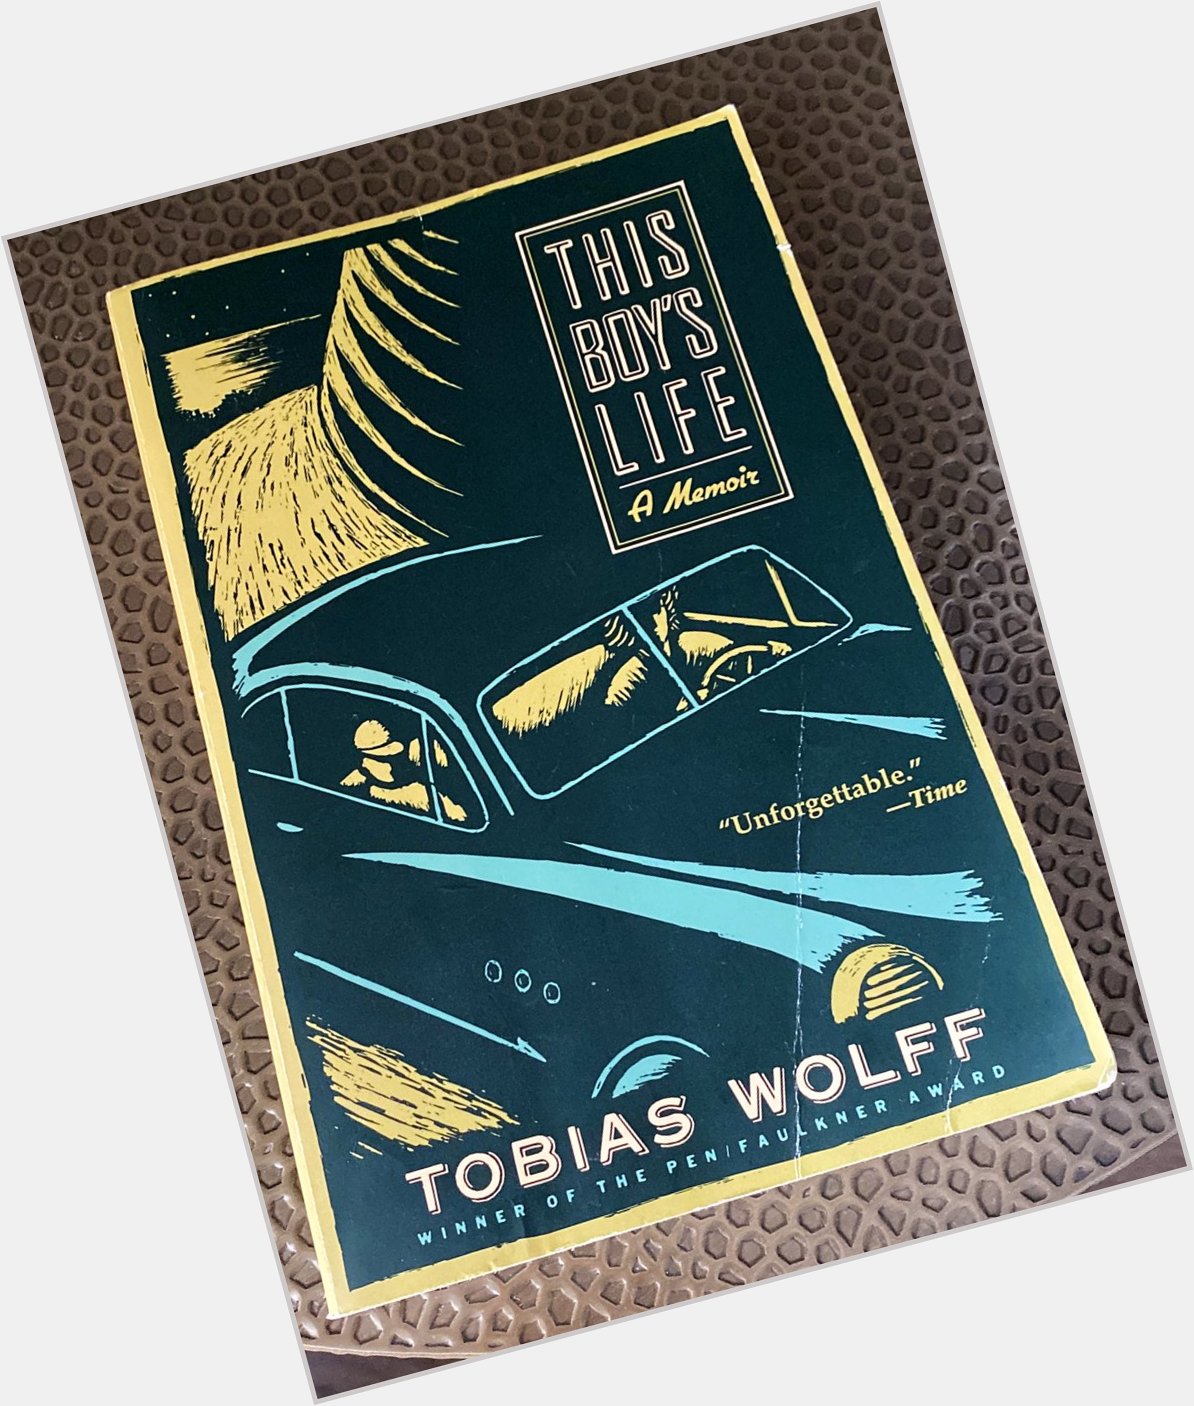 Happy birthday, Tobias Wolff! 